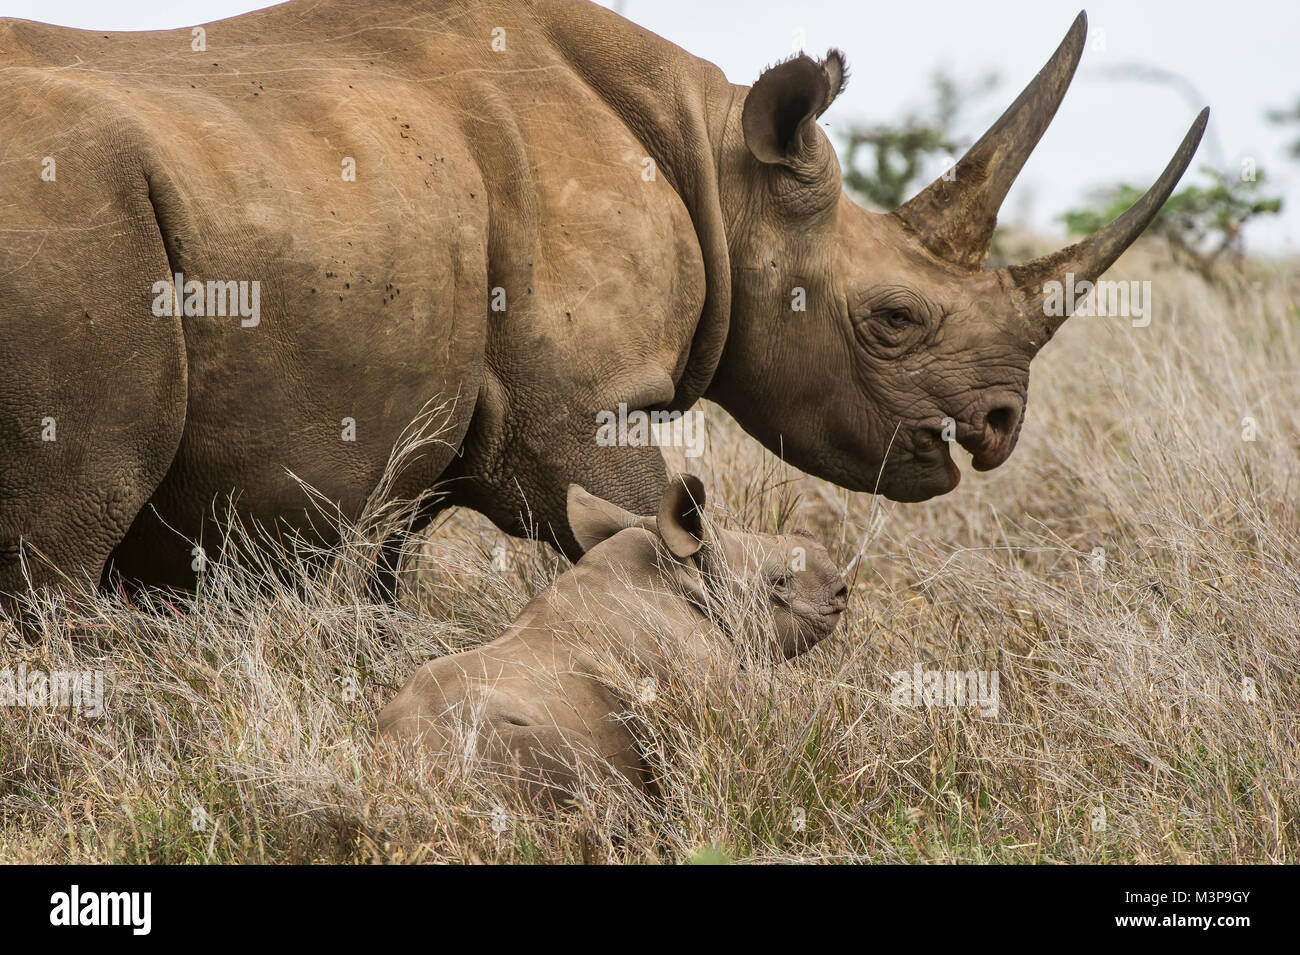 Black rhinoceros (Diceros bicornis michaeli) East African sub-species; Lewa Downs Wildlife Conservancy, Kenya. Stock Photo